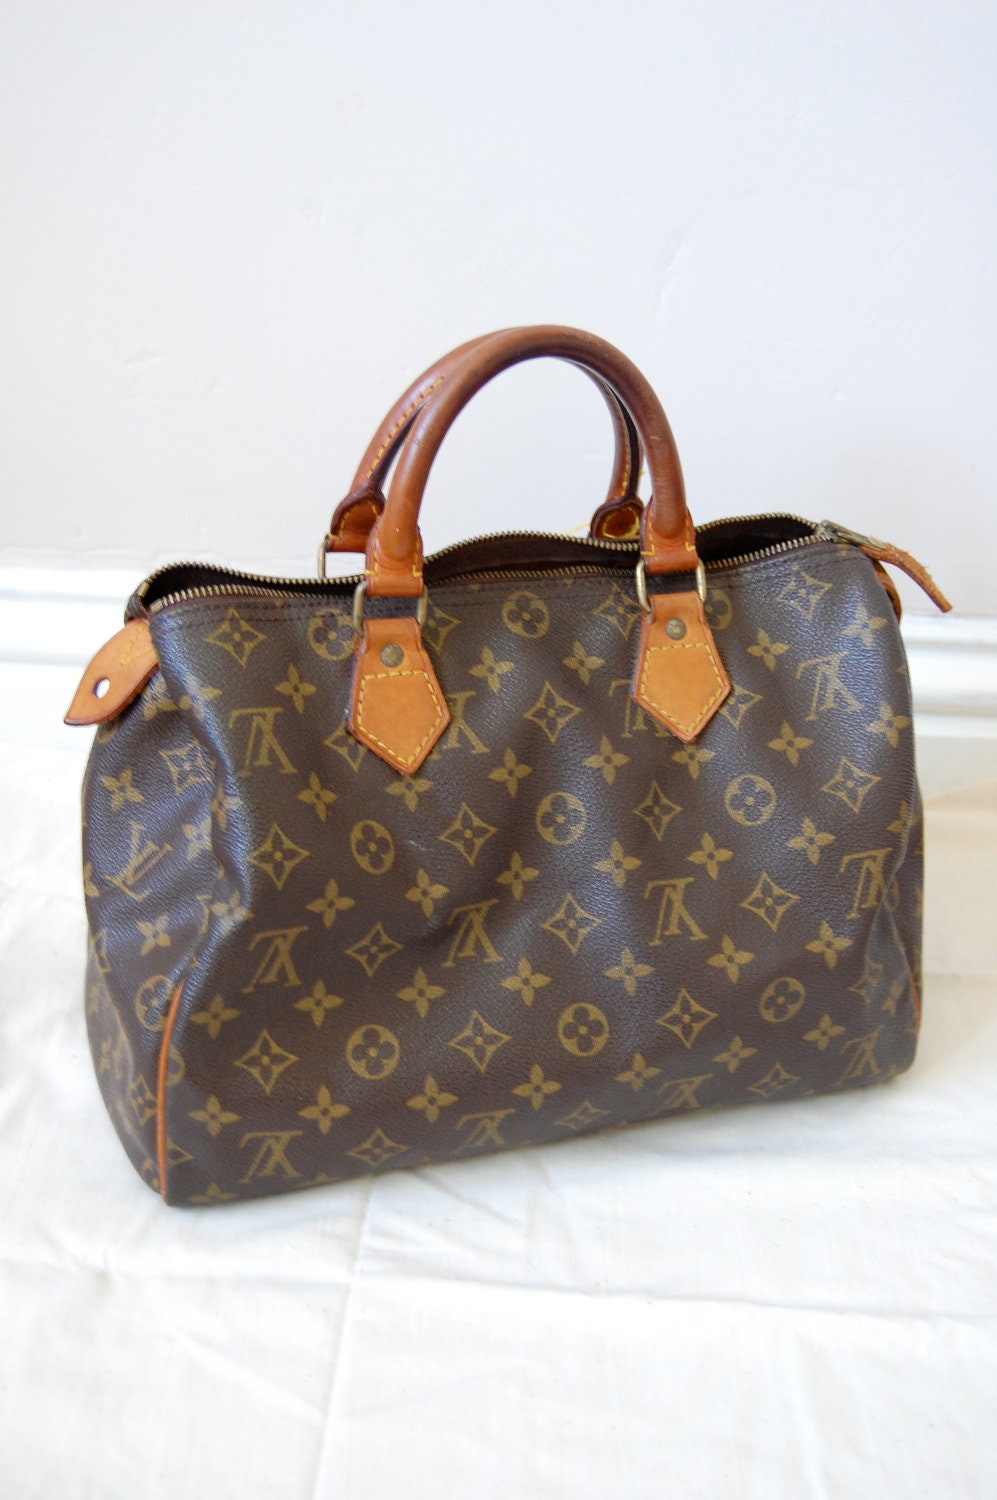 Vintage Authentic Louis Vuitton Speedy 30 Handbag Purse Tote